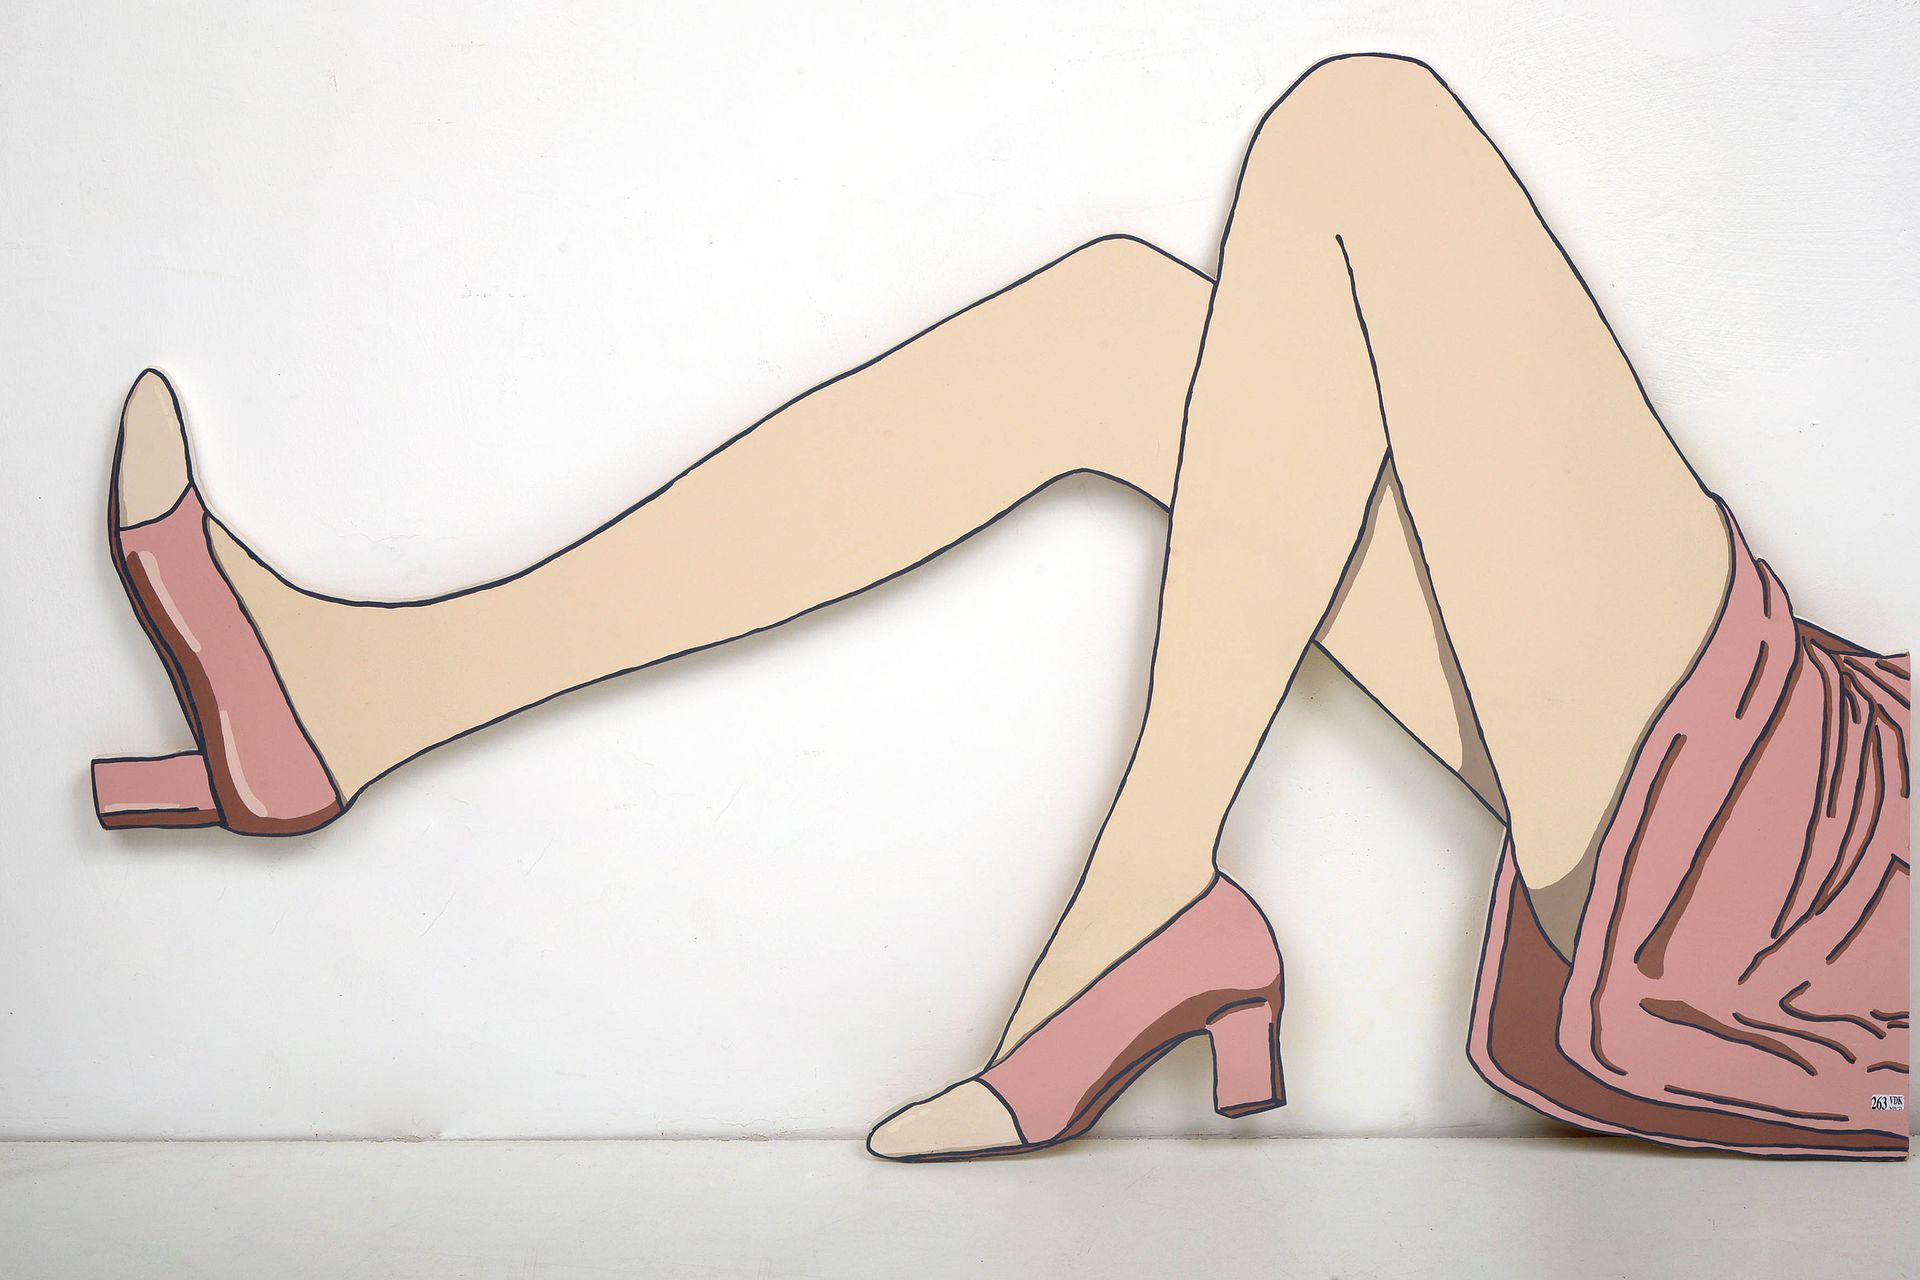 HASEGAWA Jun (1969) "Legs" acrylic on MDF panel. By Jun Hasegawa. Japanese schoo&hellip;